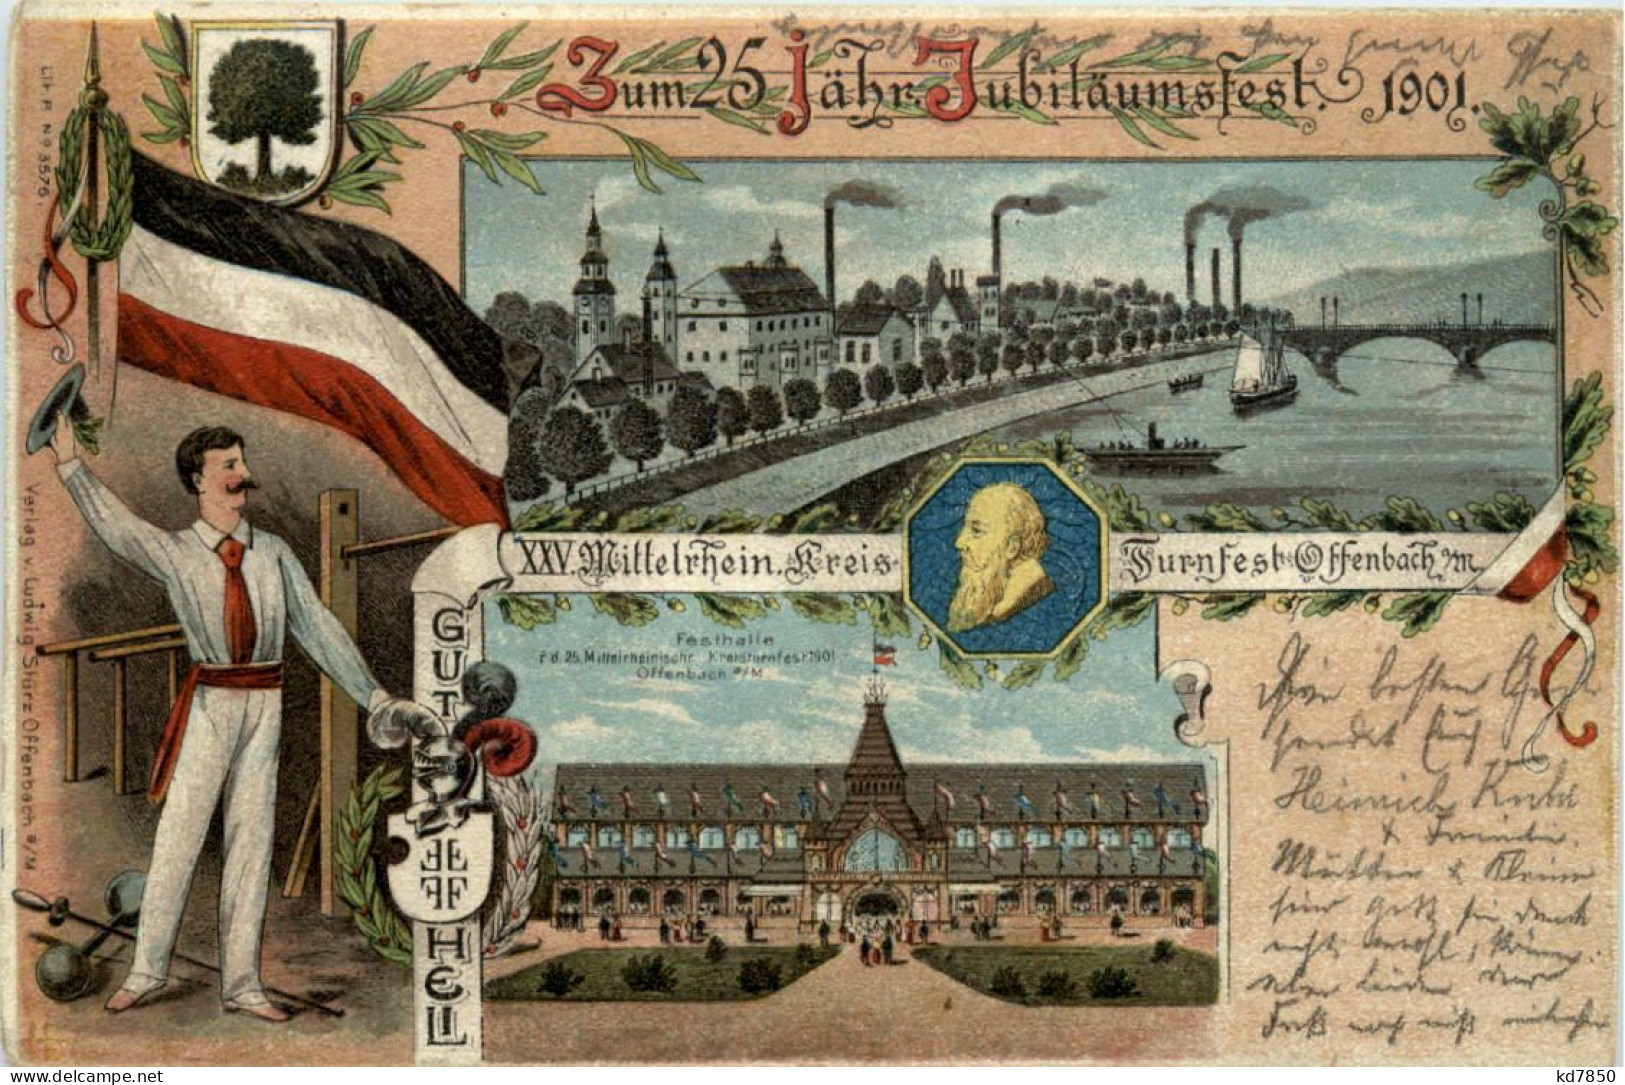 Offenbach - 25. Kreis Turnfest 1901 - Litho - Offenbach